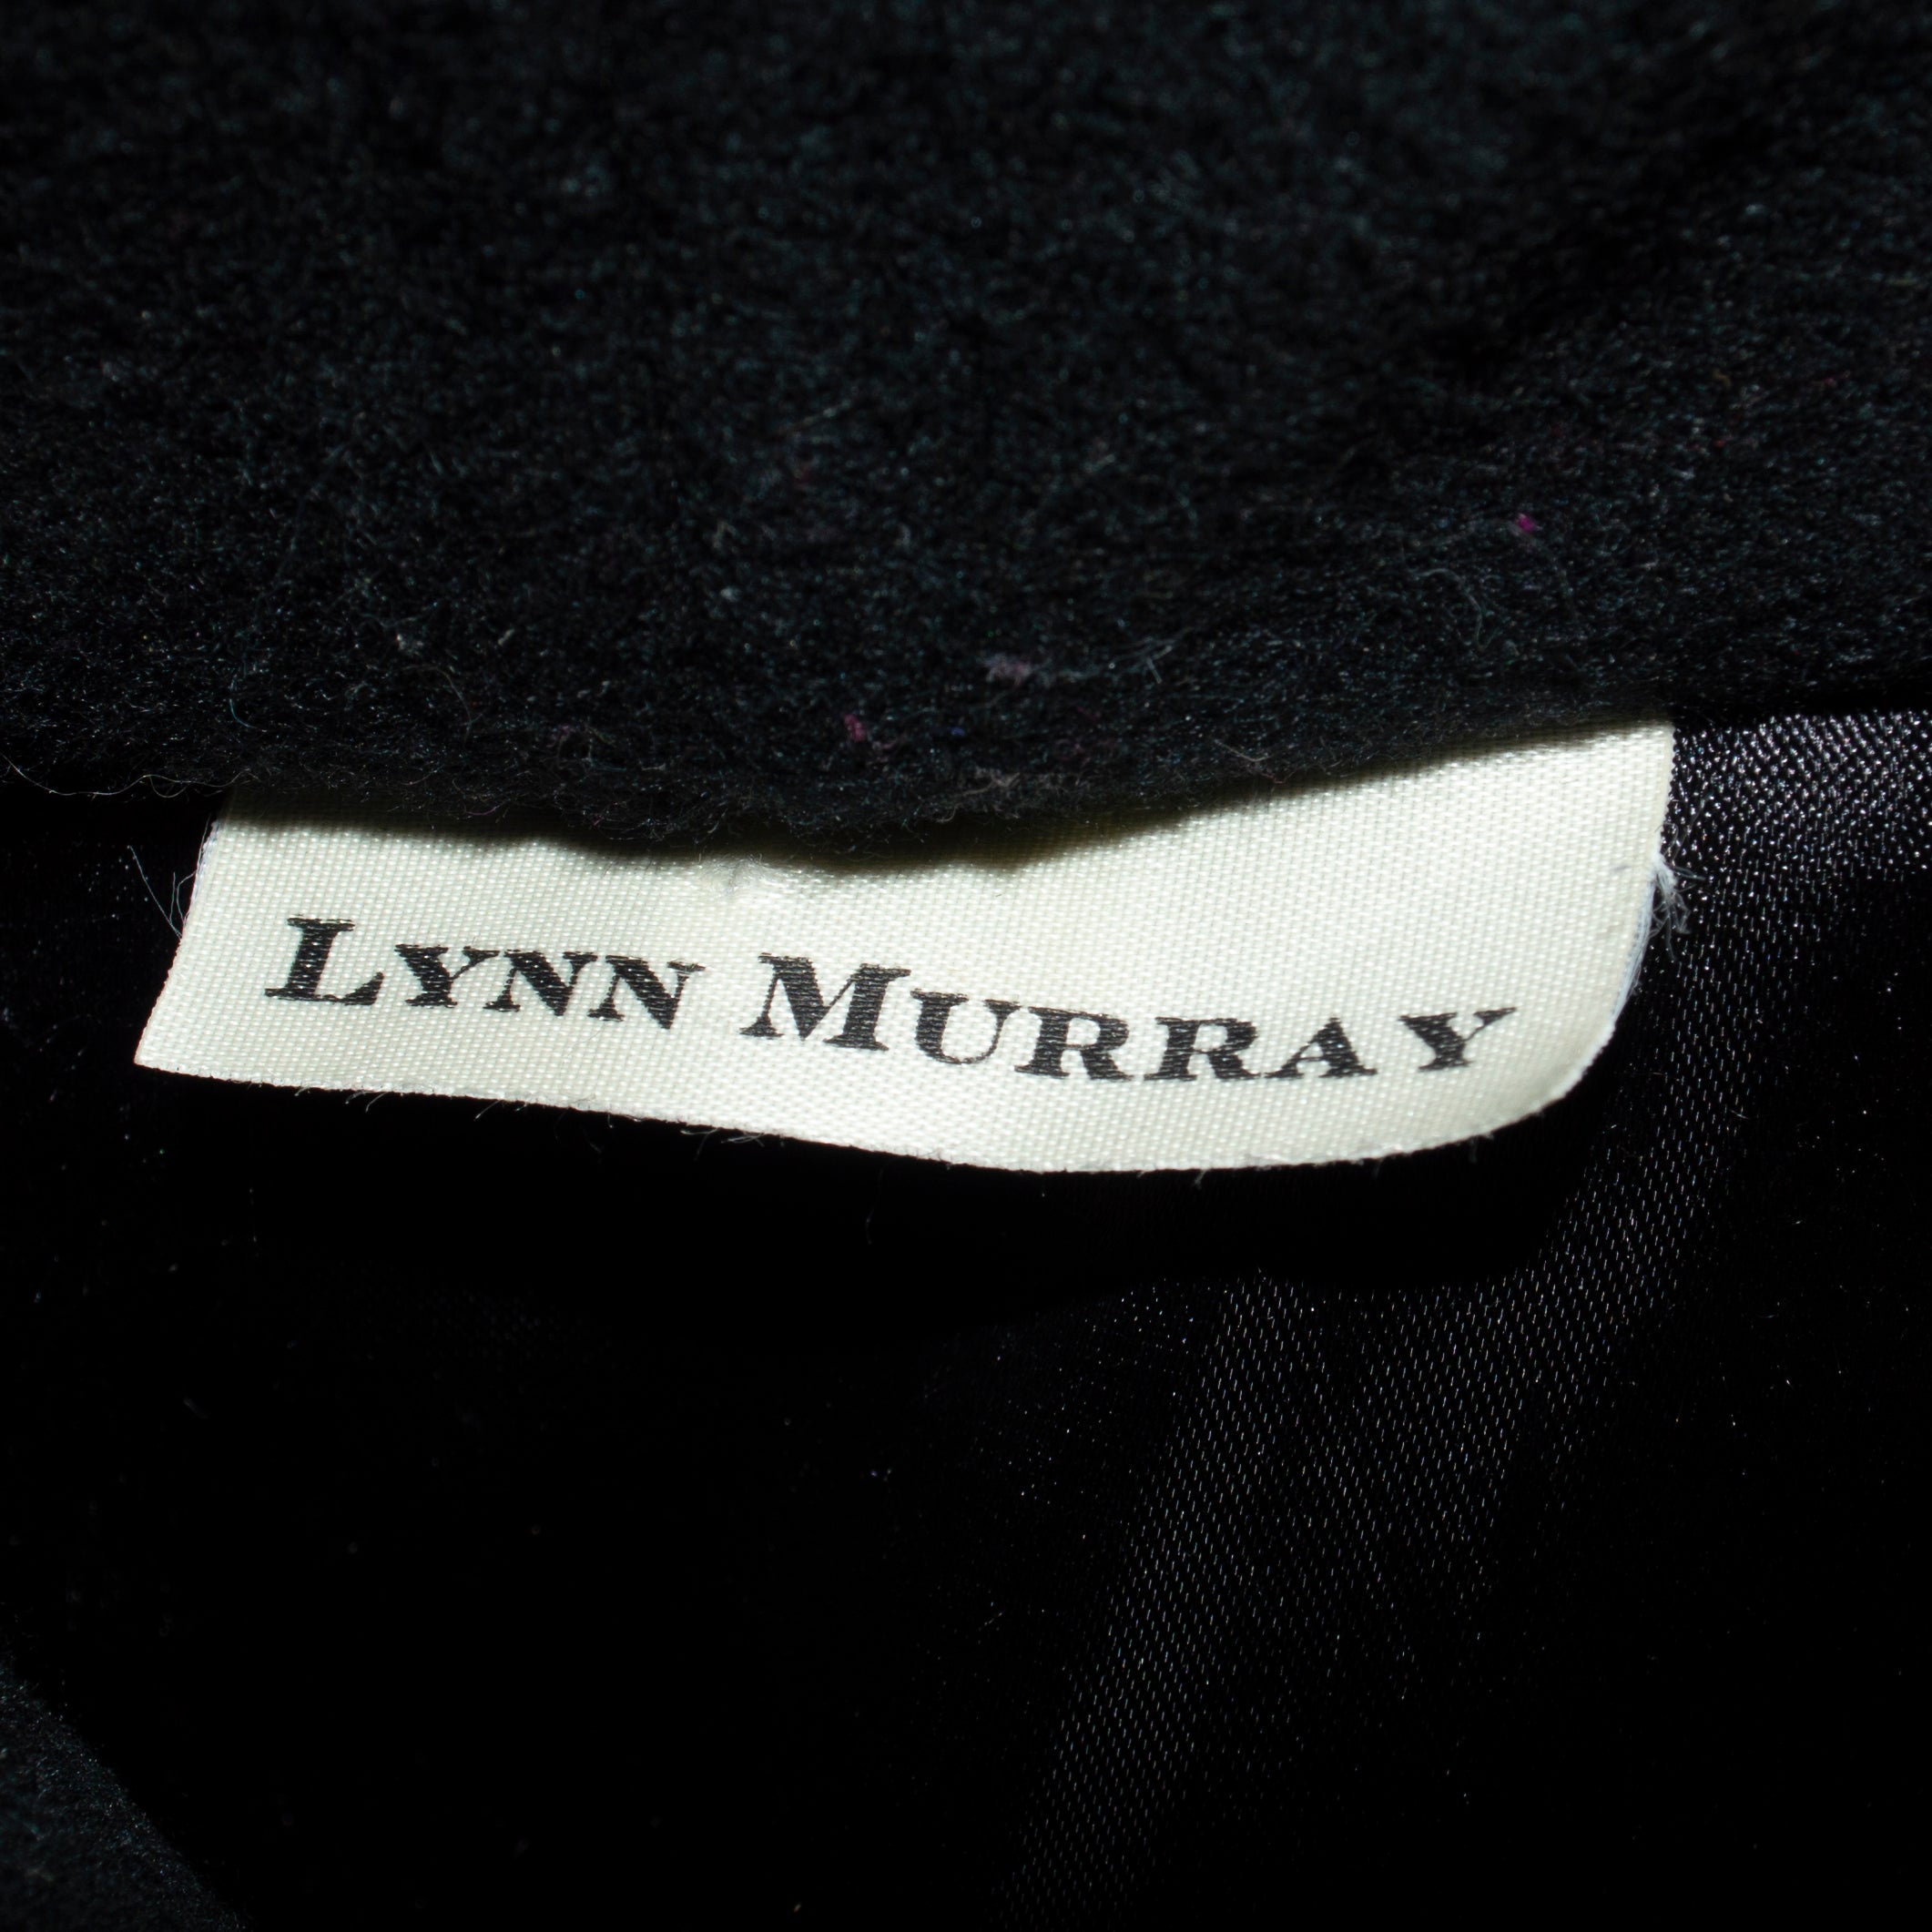 Lynn Murray Vintage Coat